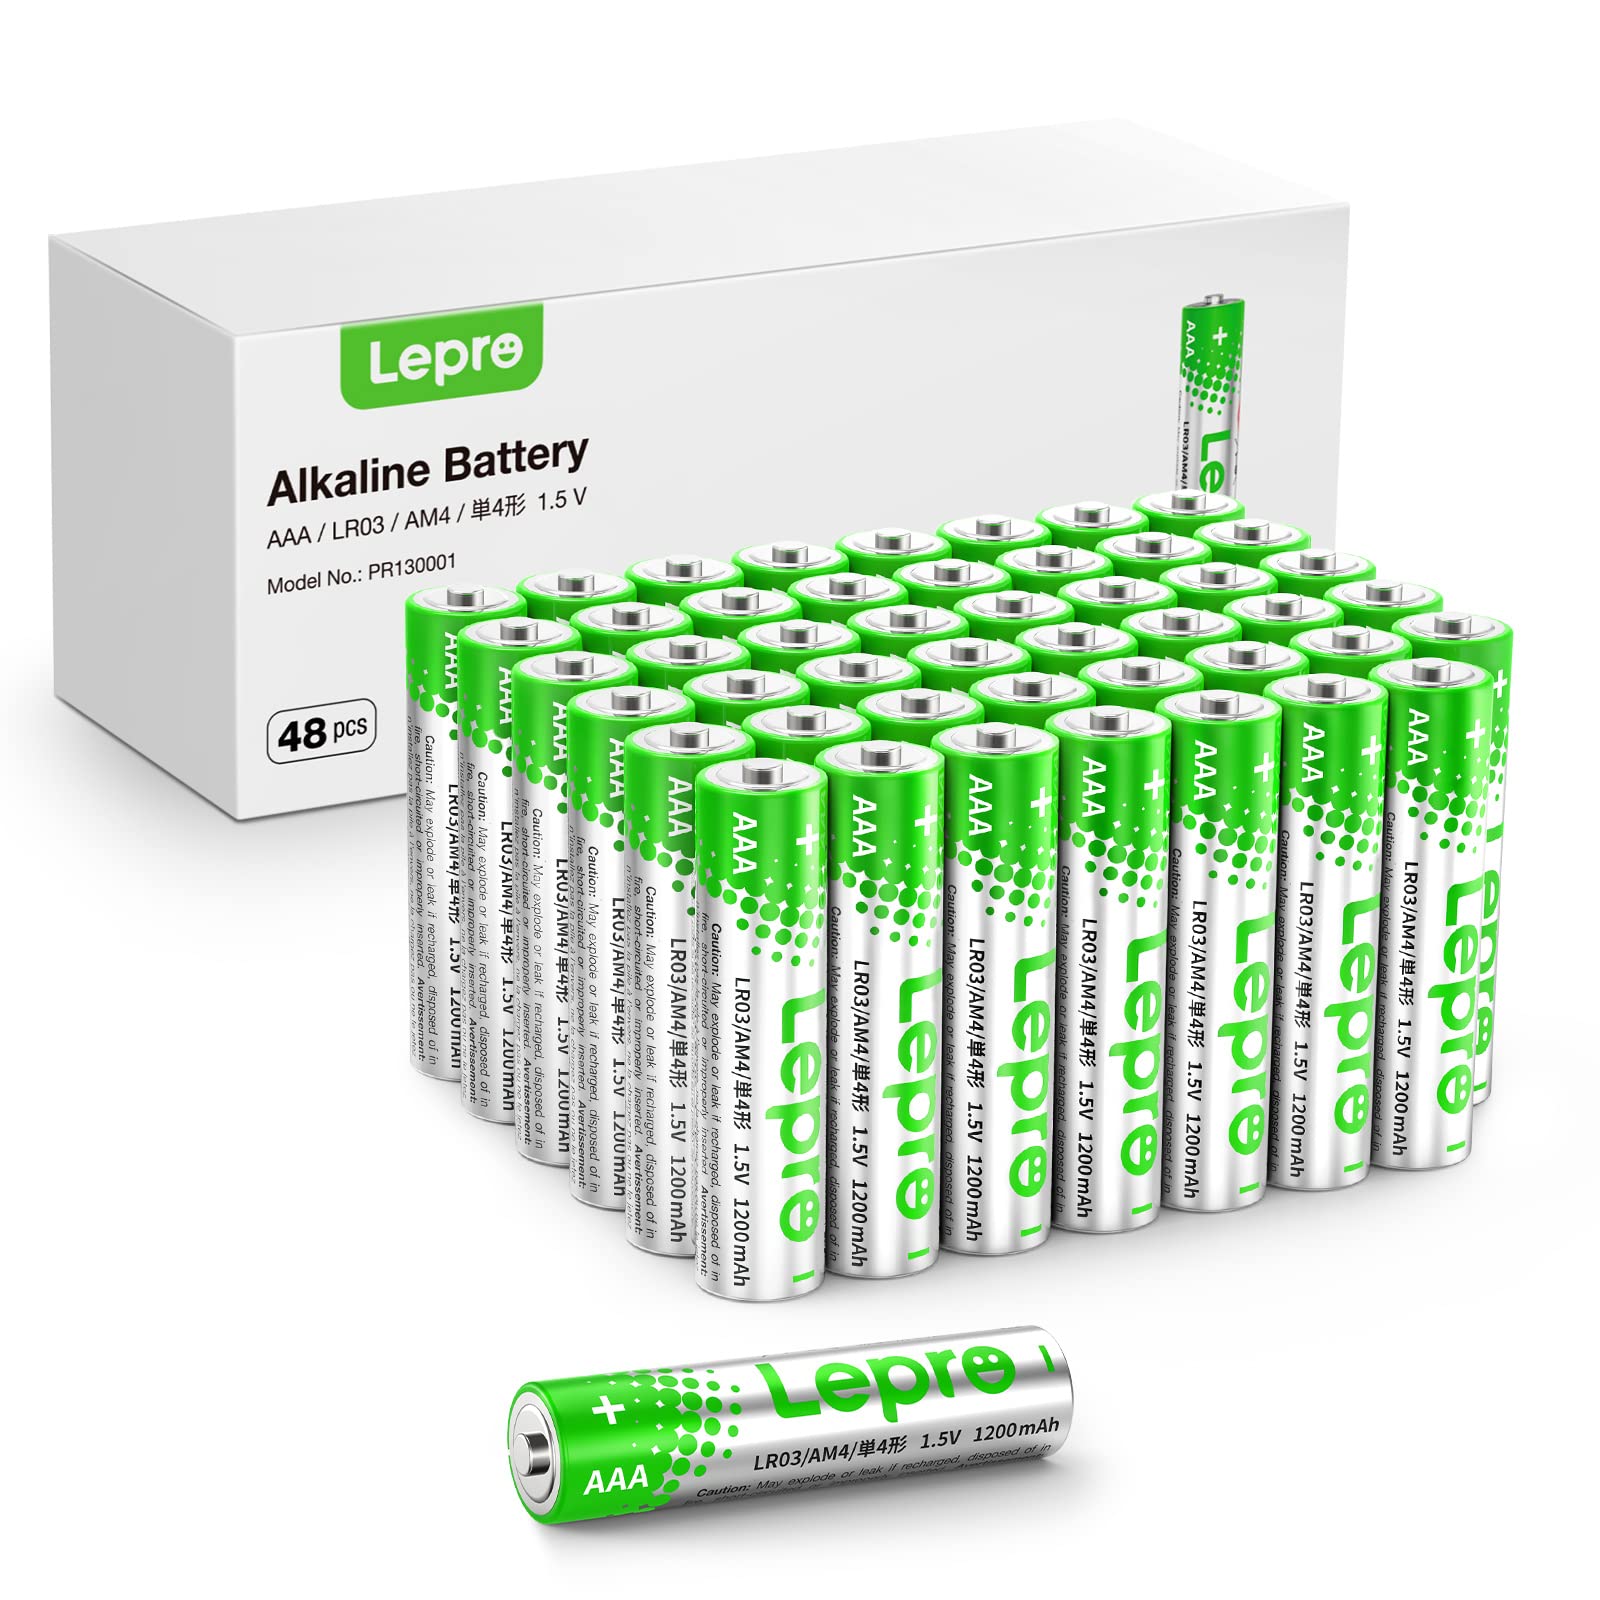 Exclusif Lepro Piles Alcalines AAA - Lot de 48-1,5V LR0